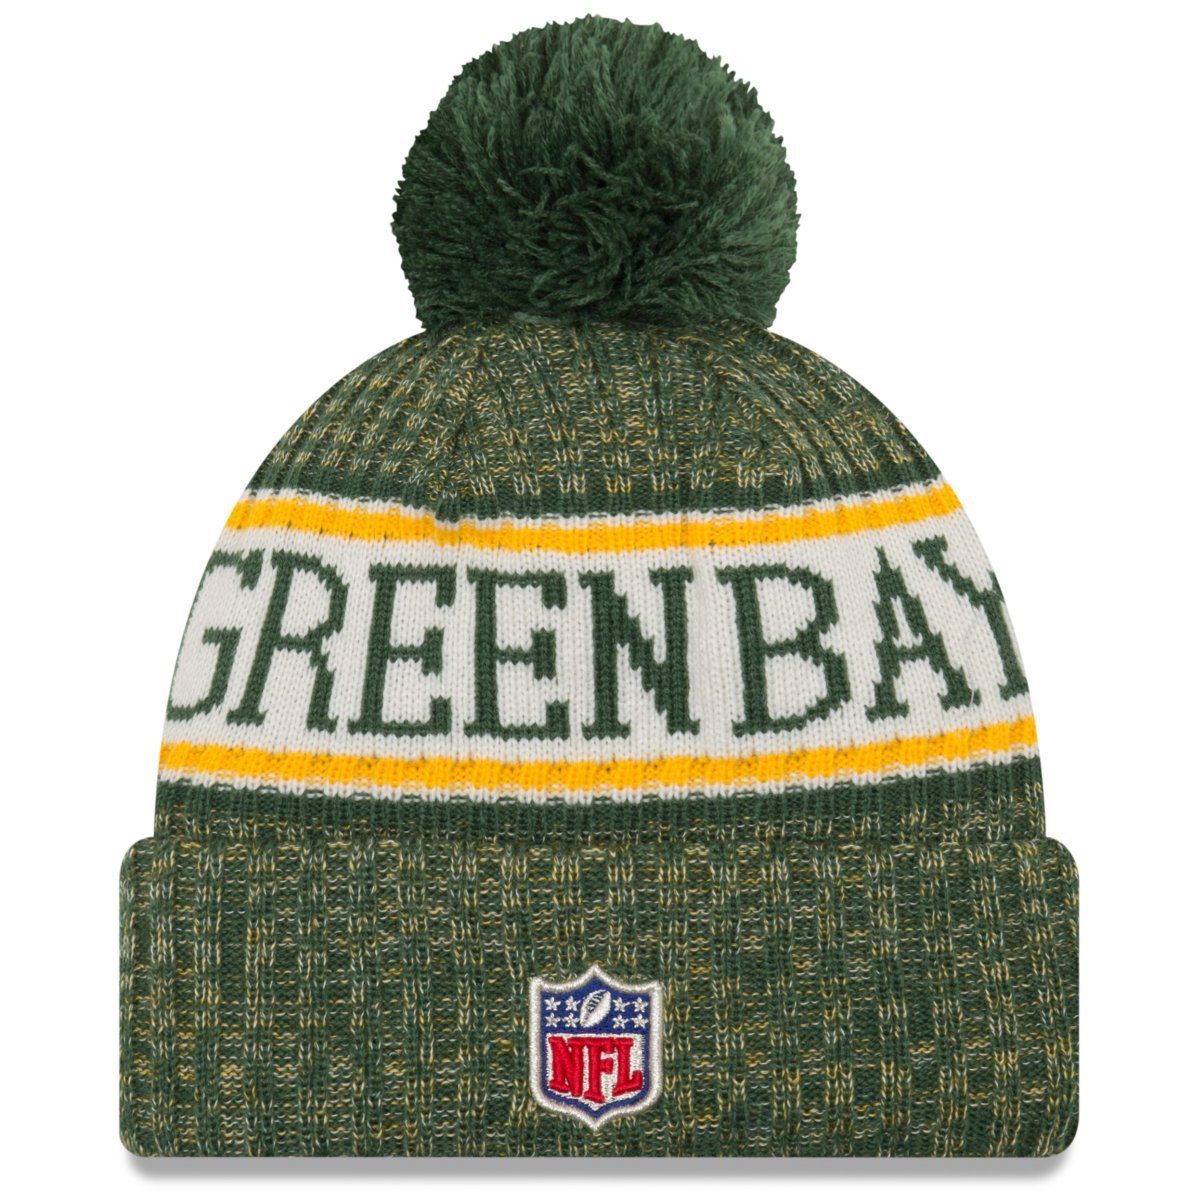 Bobble Bay gruengelb Green Sideline New Era NFL Fleecemütze Packers